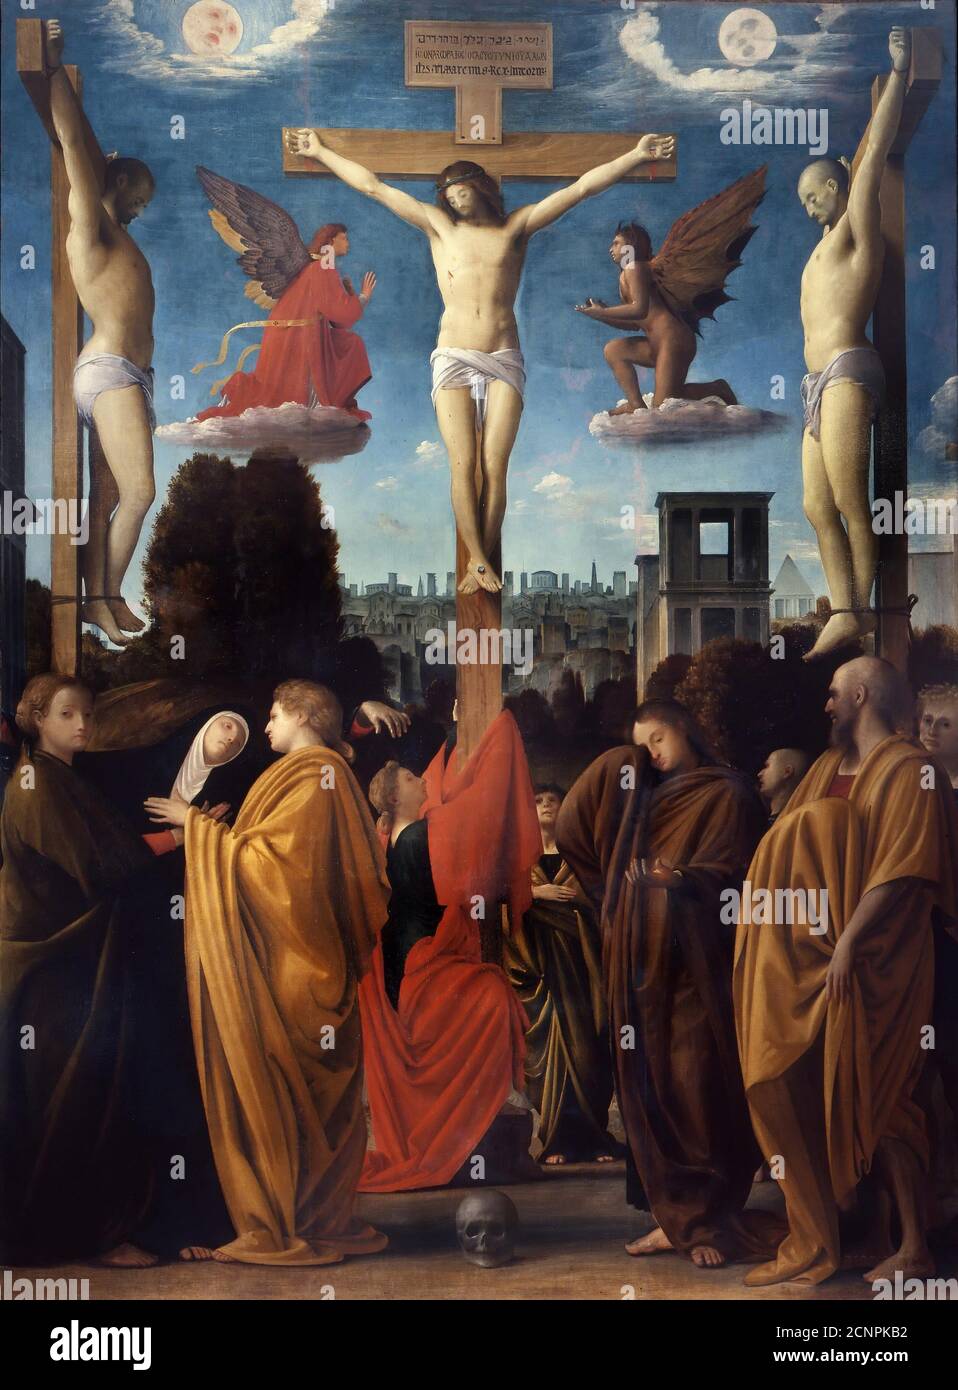 The Crucifixion, ca. 1505-1510. Found in the collection of Pinacoteca di Brera, Milan. Stock Photo